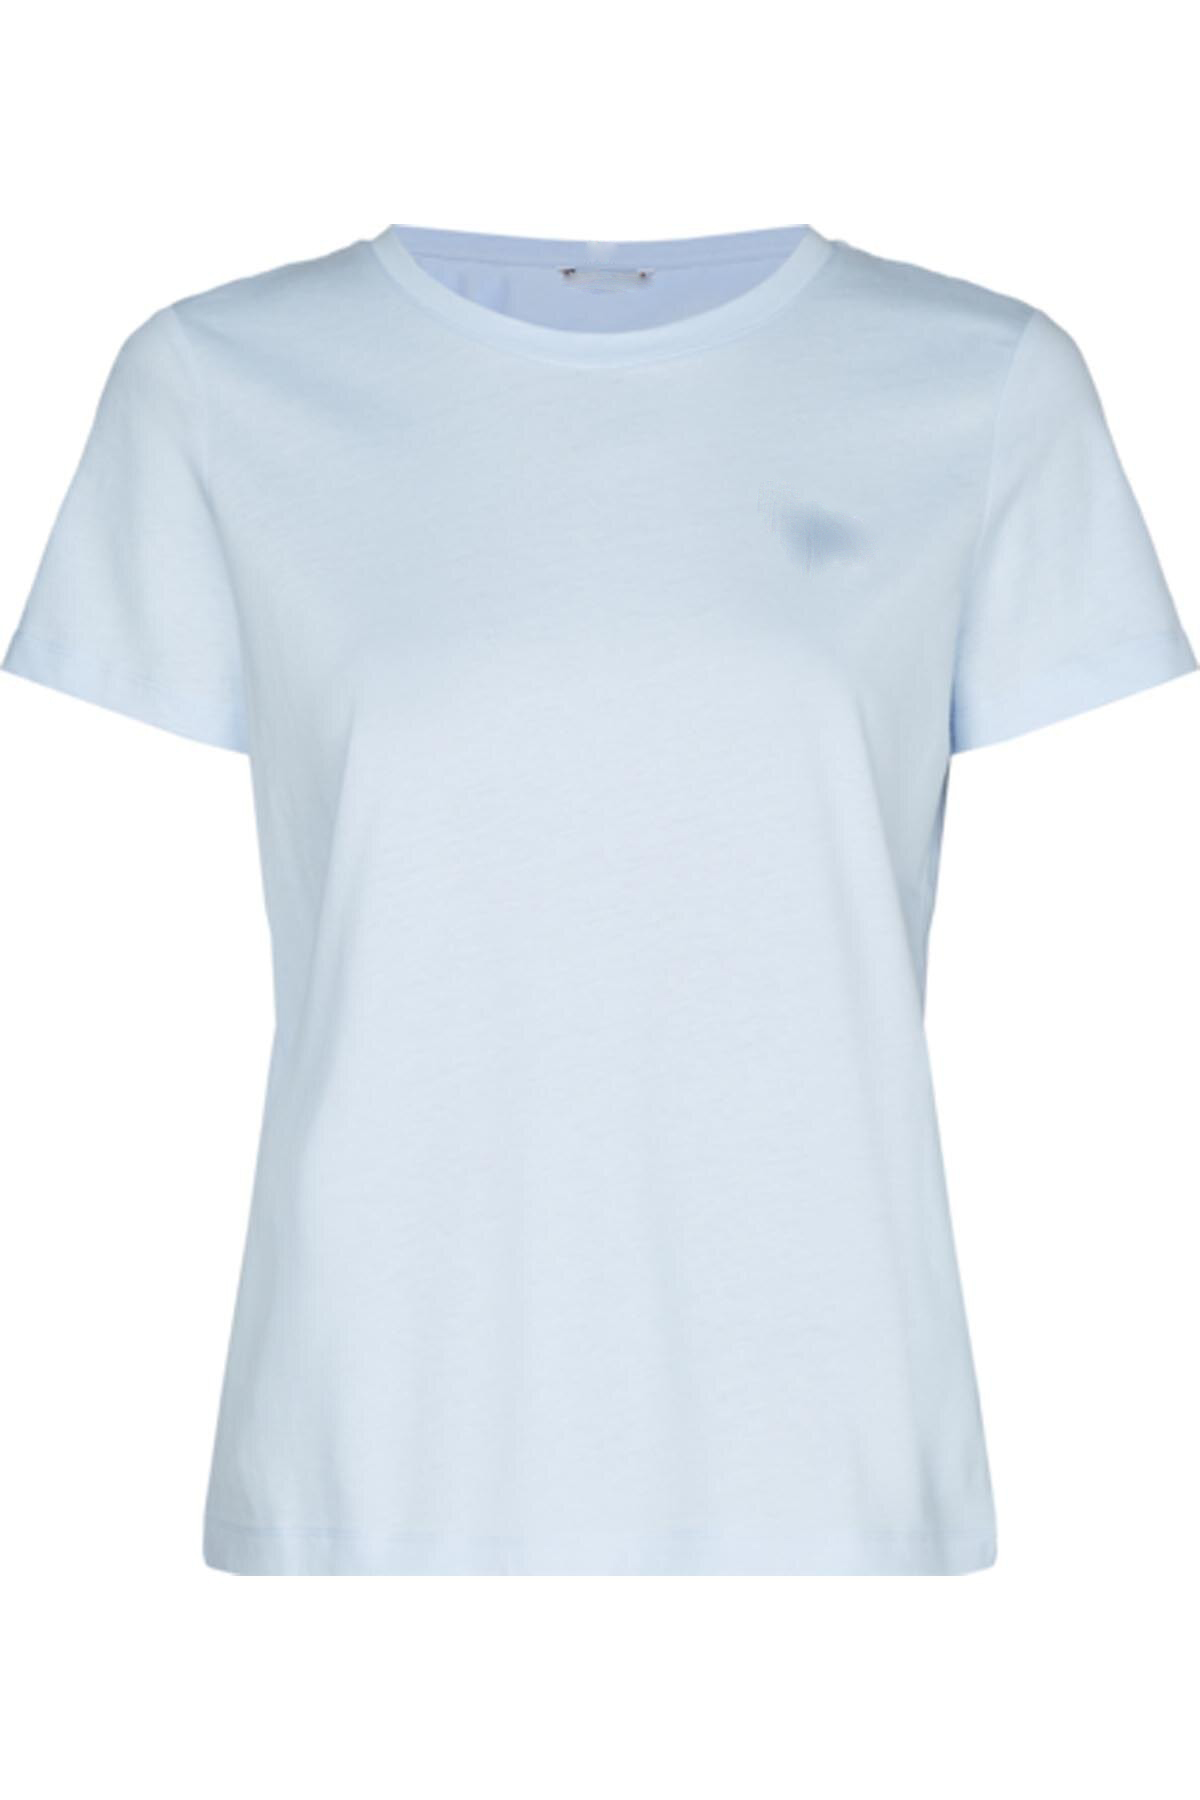 Wholesales Summer Women's O Neck half sleeve White color short Sleeve ...